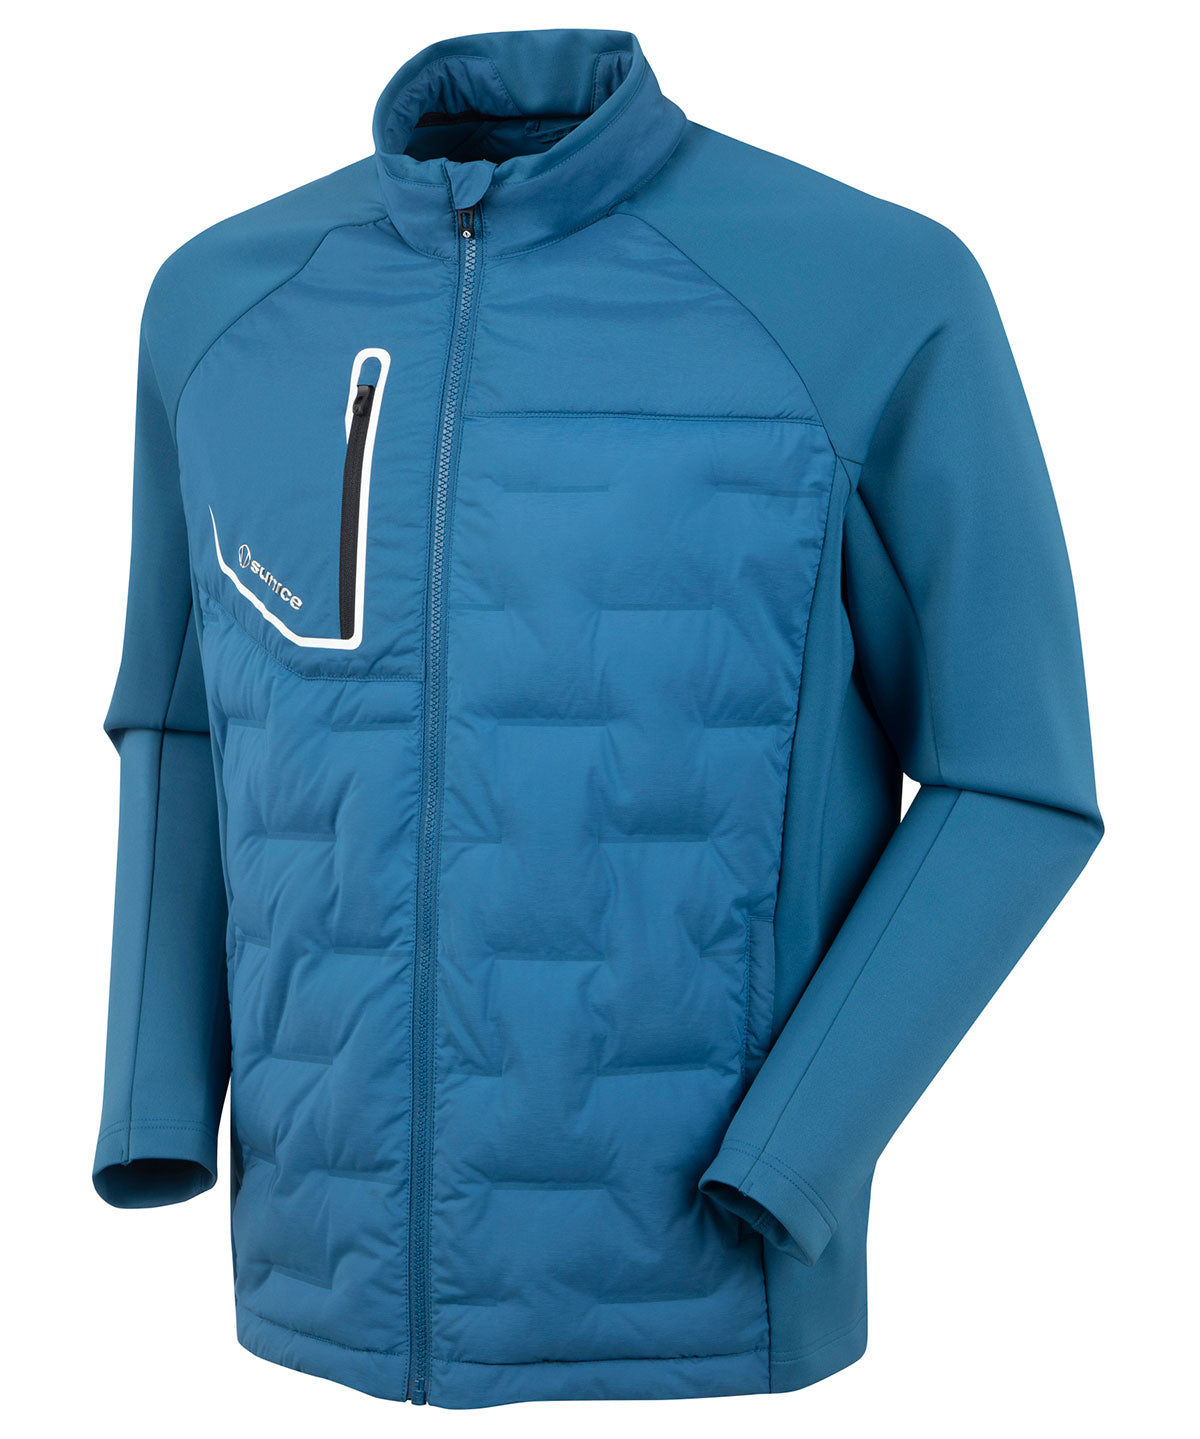 Expert Expolite thermal jacket, CR307